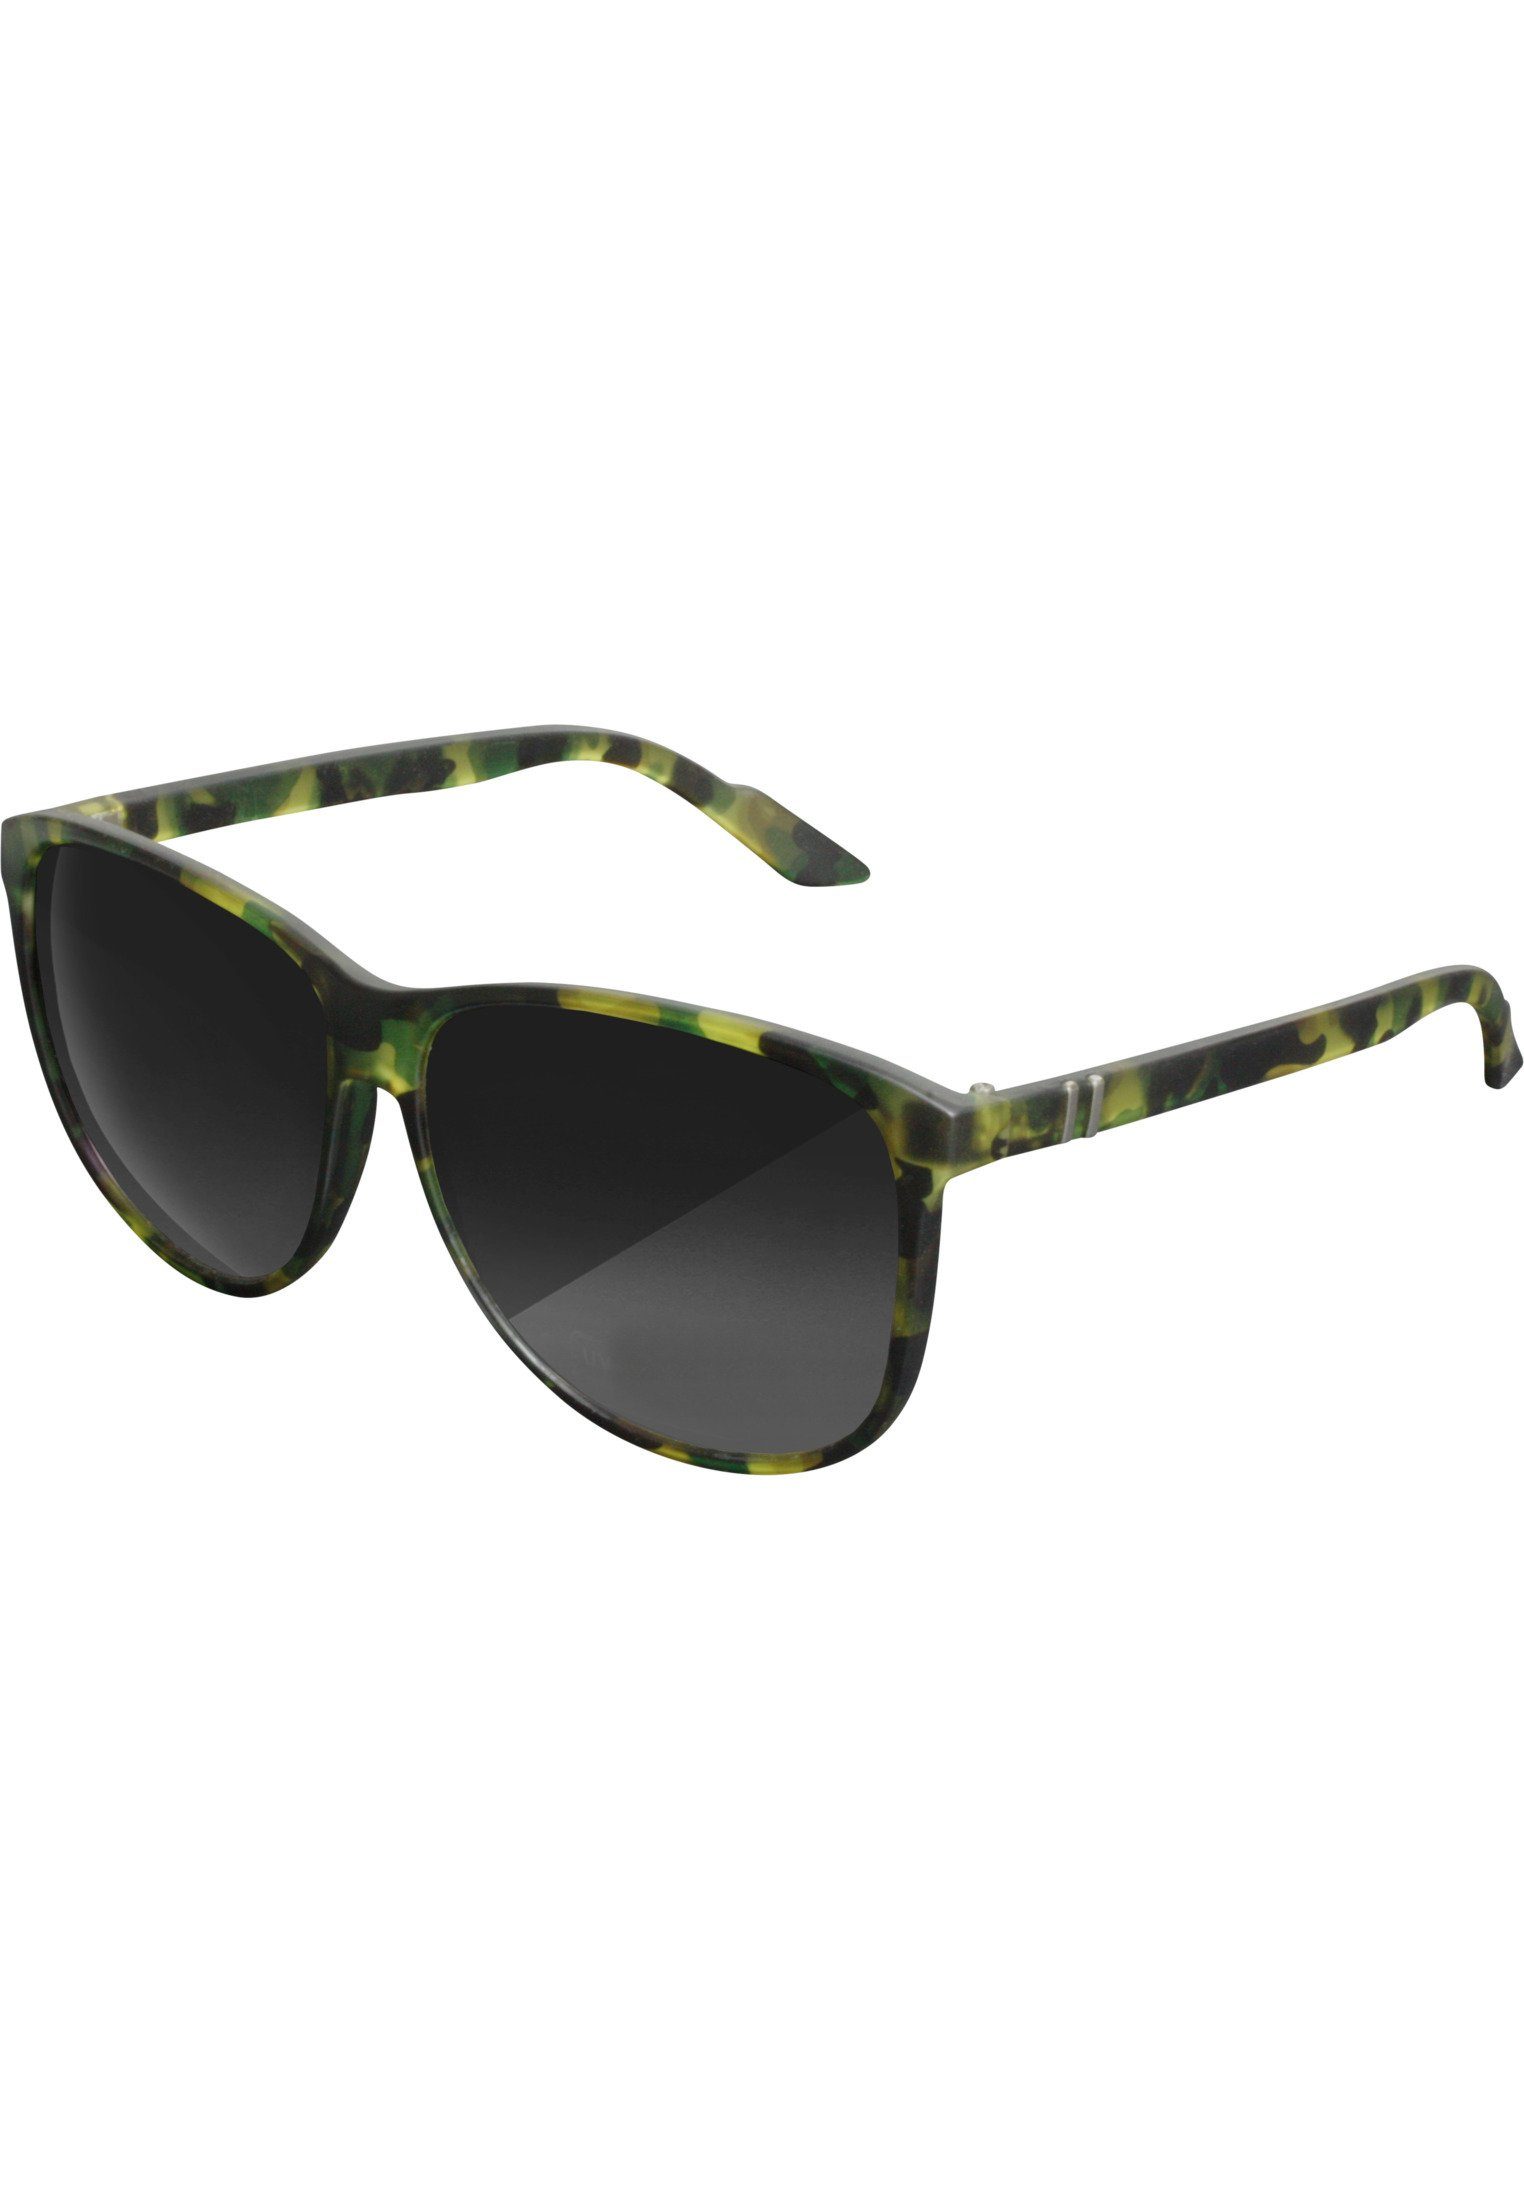 MSTRDS Sonnenbrille MSTRDS Accessoires Sunglasses Chirwa